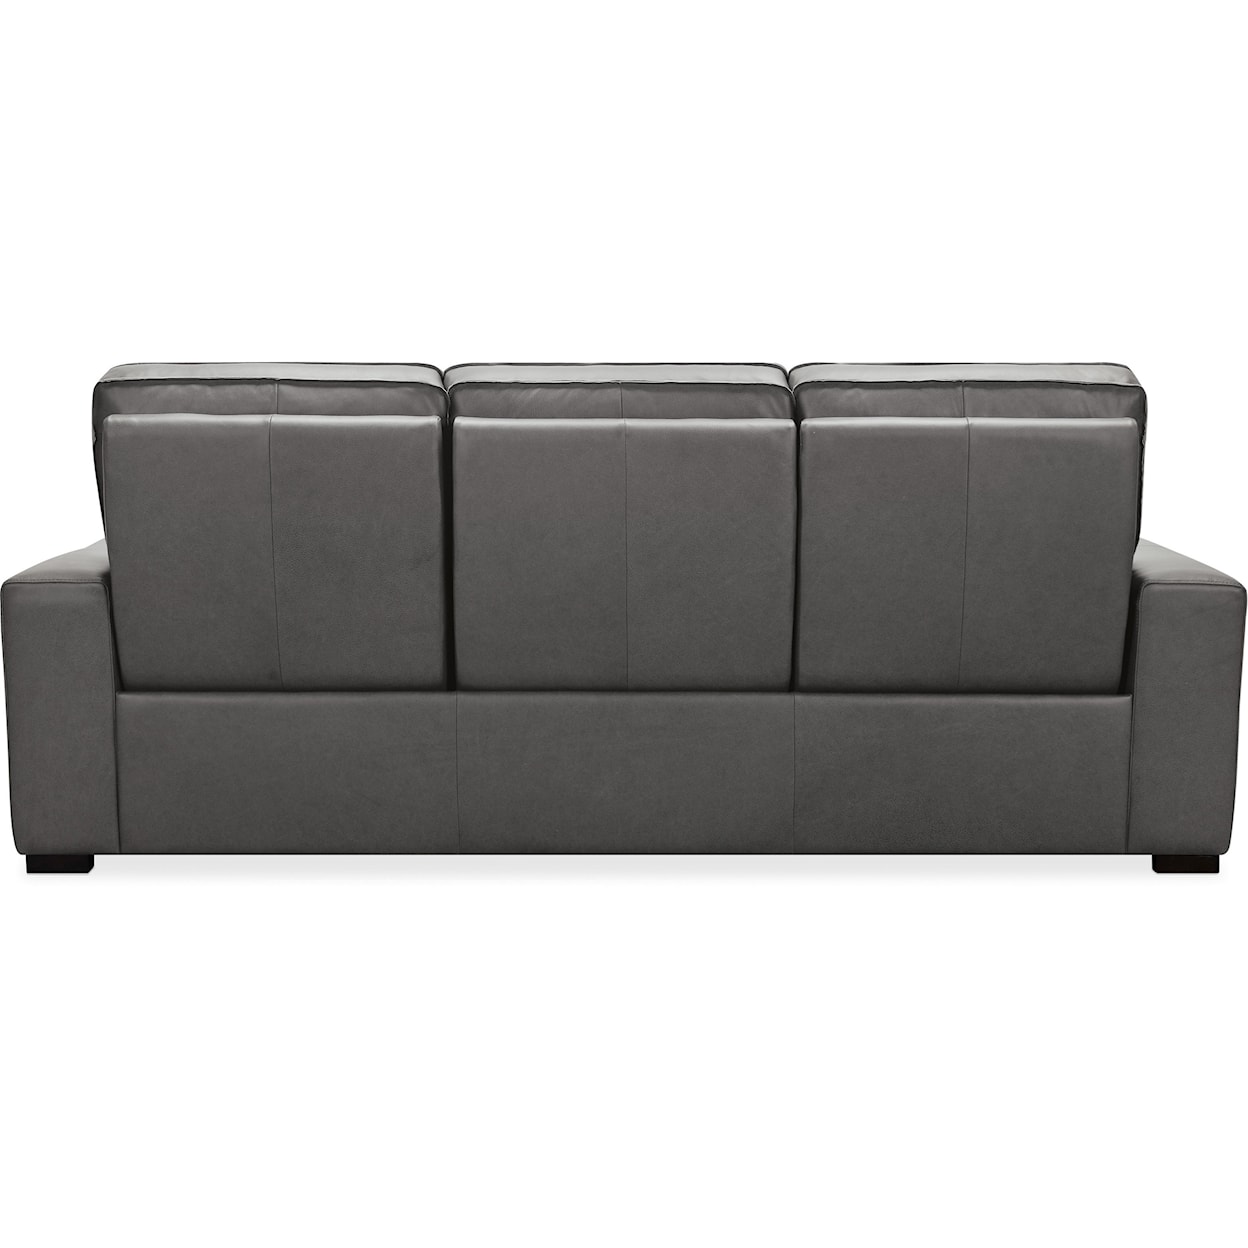 Hooker Furniture Braeburn Leather Power Reclining Sofa